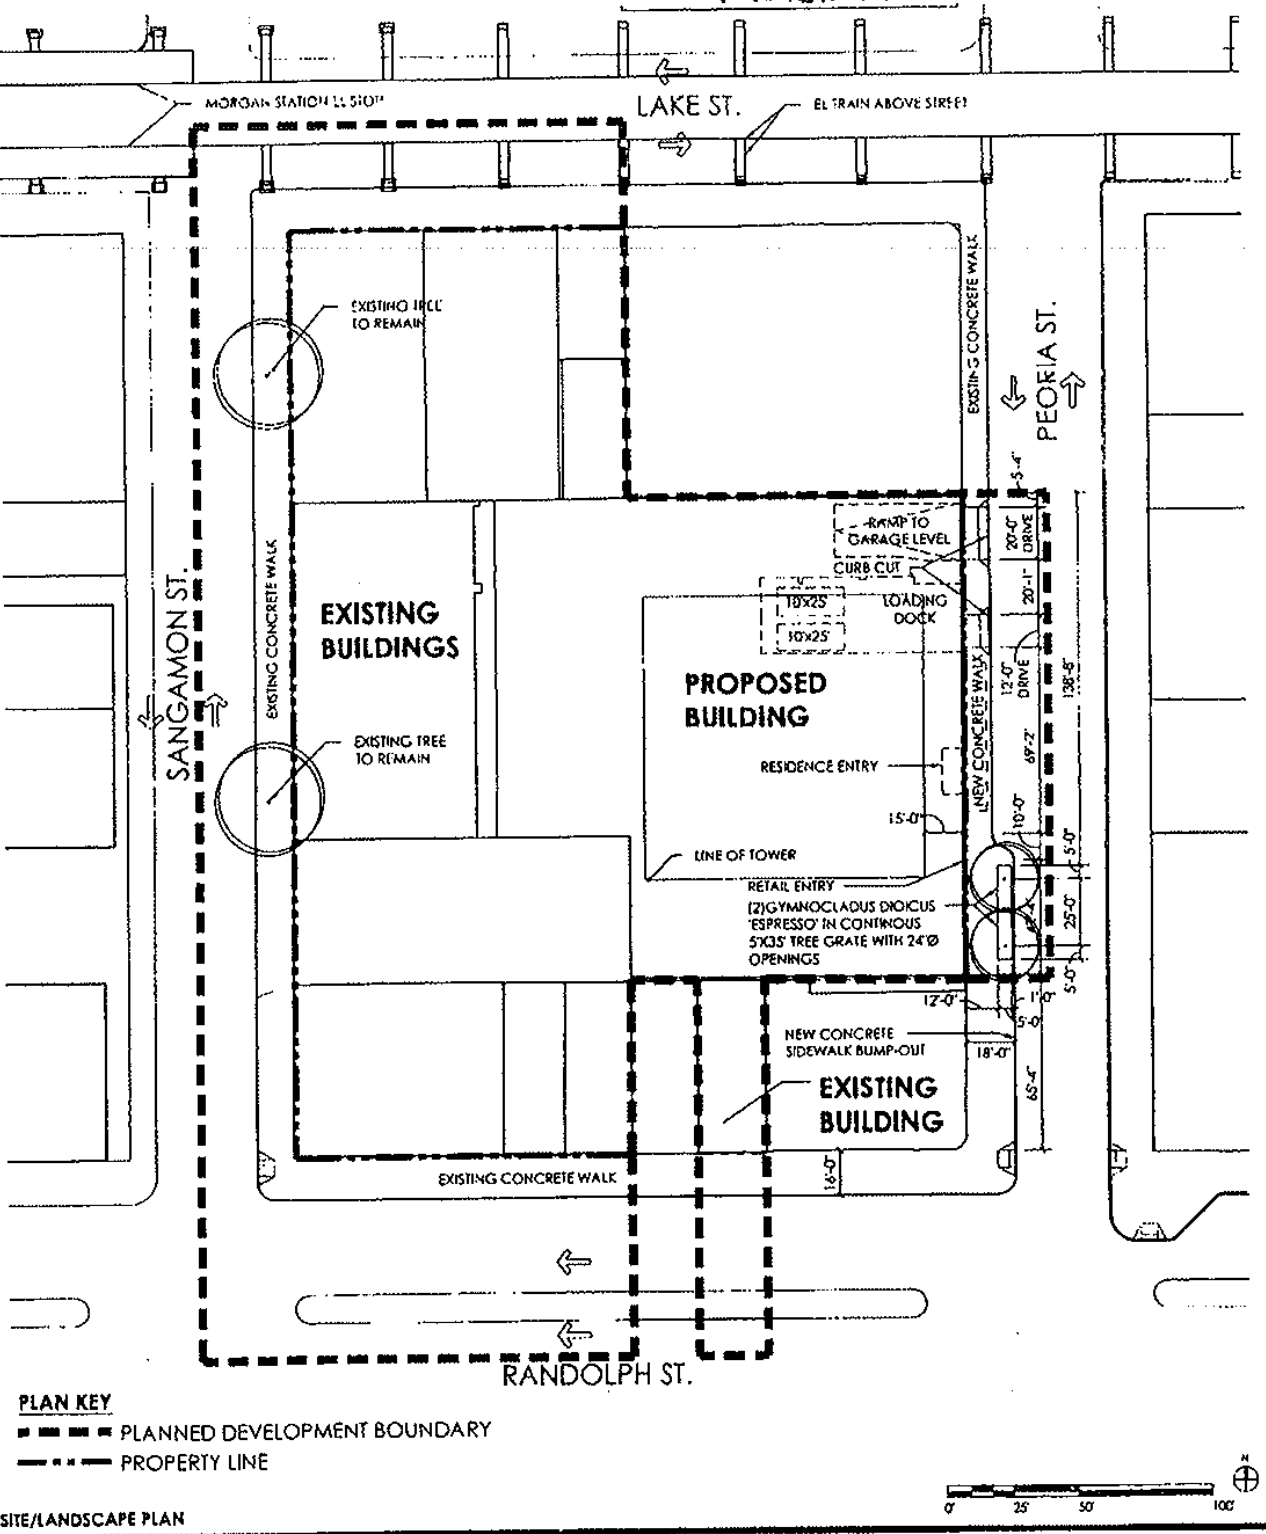 906 W Randolph Street site plan